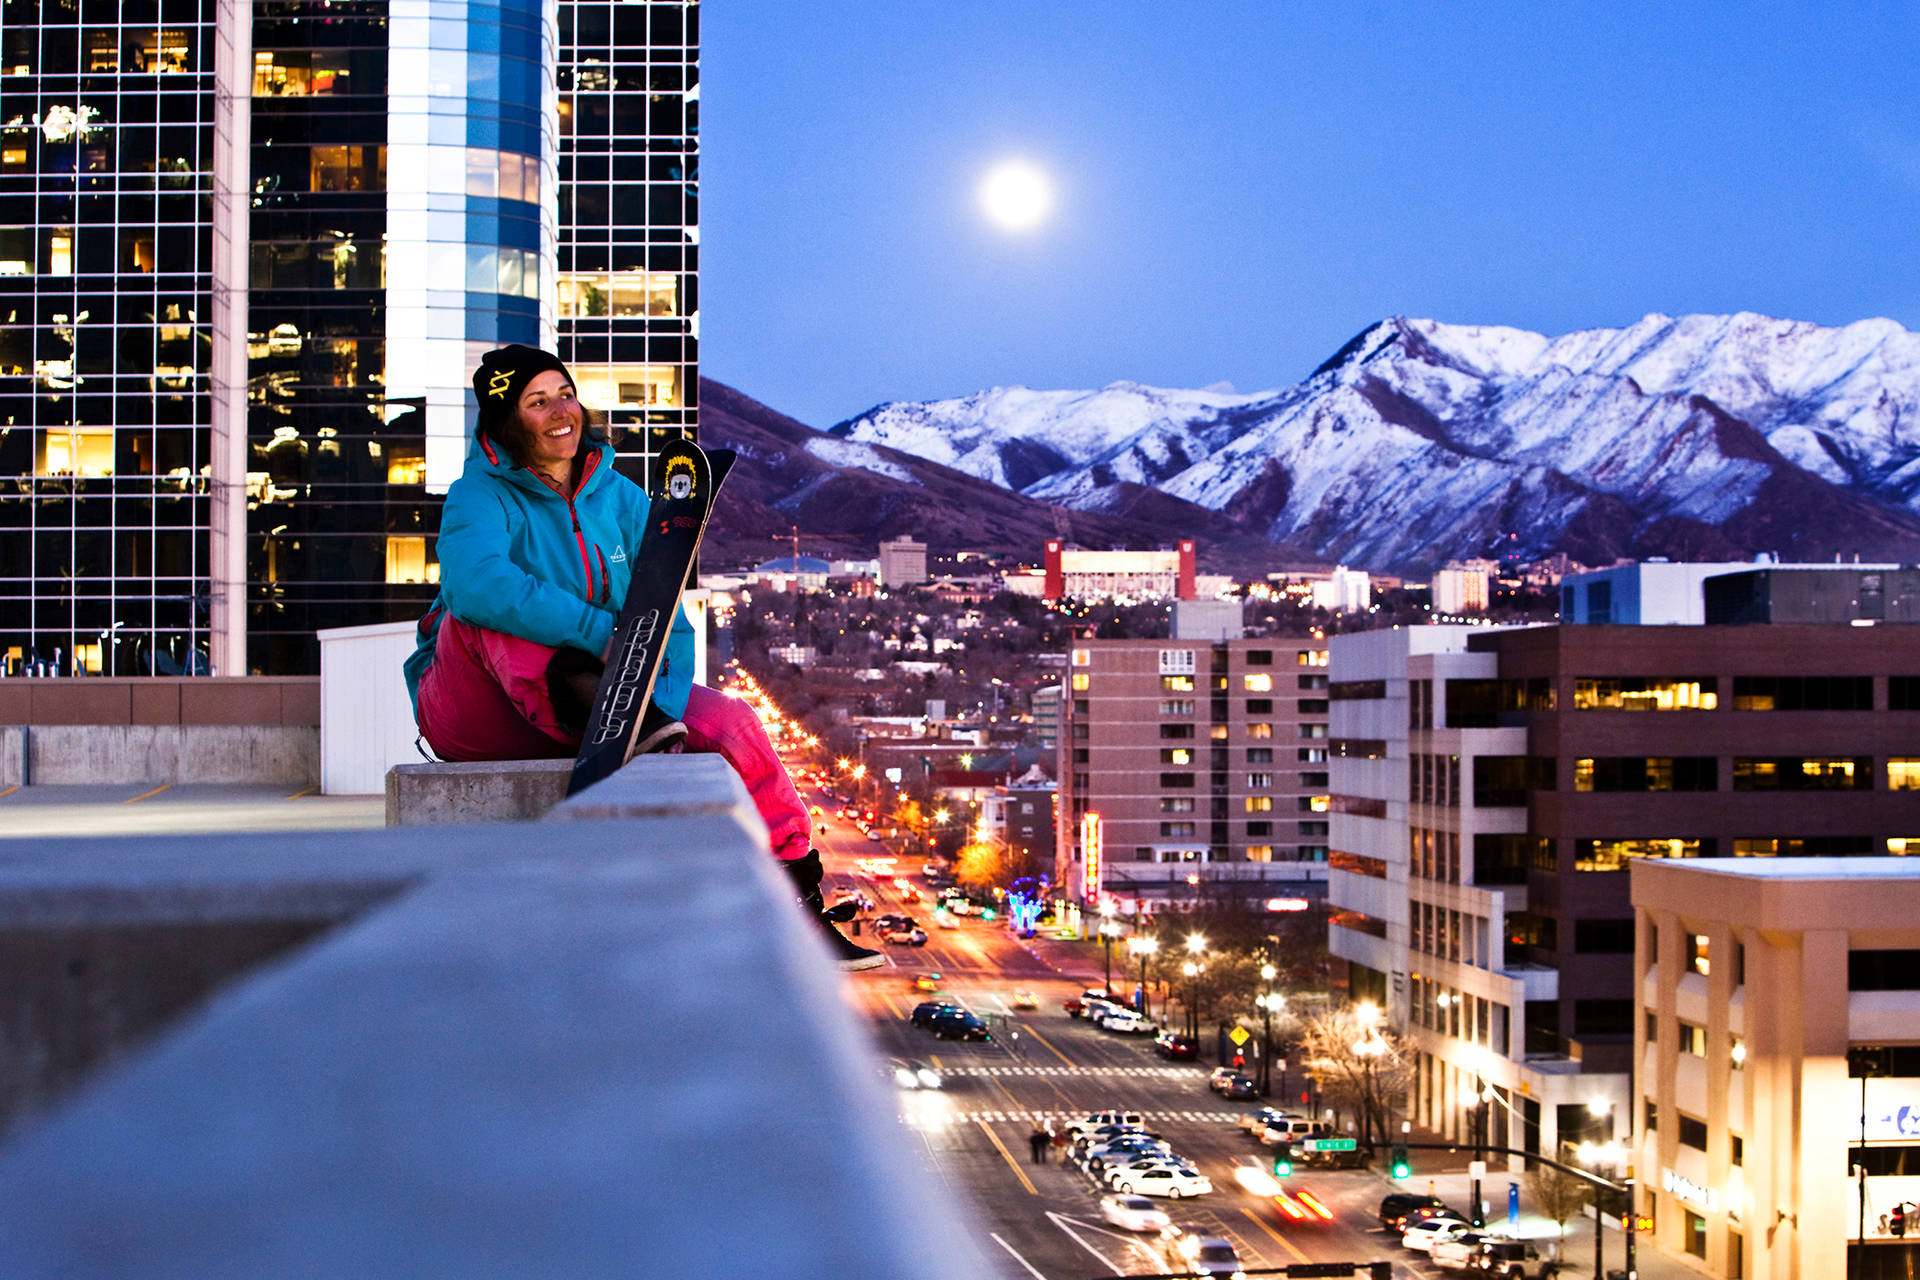 Salt Lake City Girl On Ledge Background